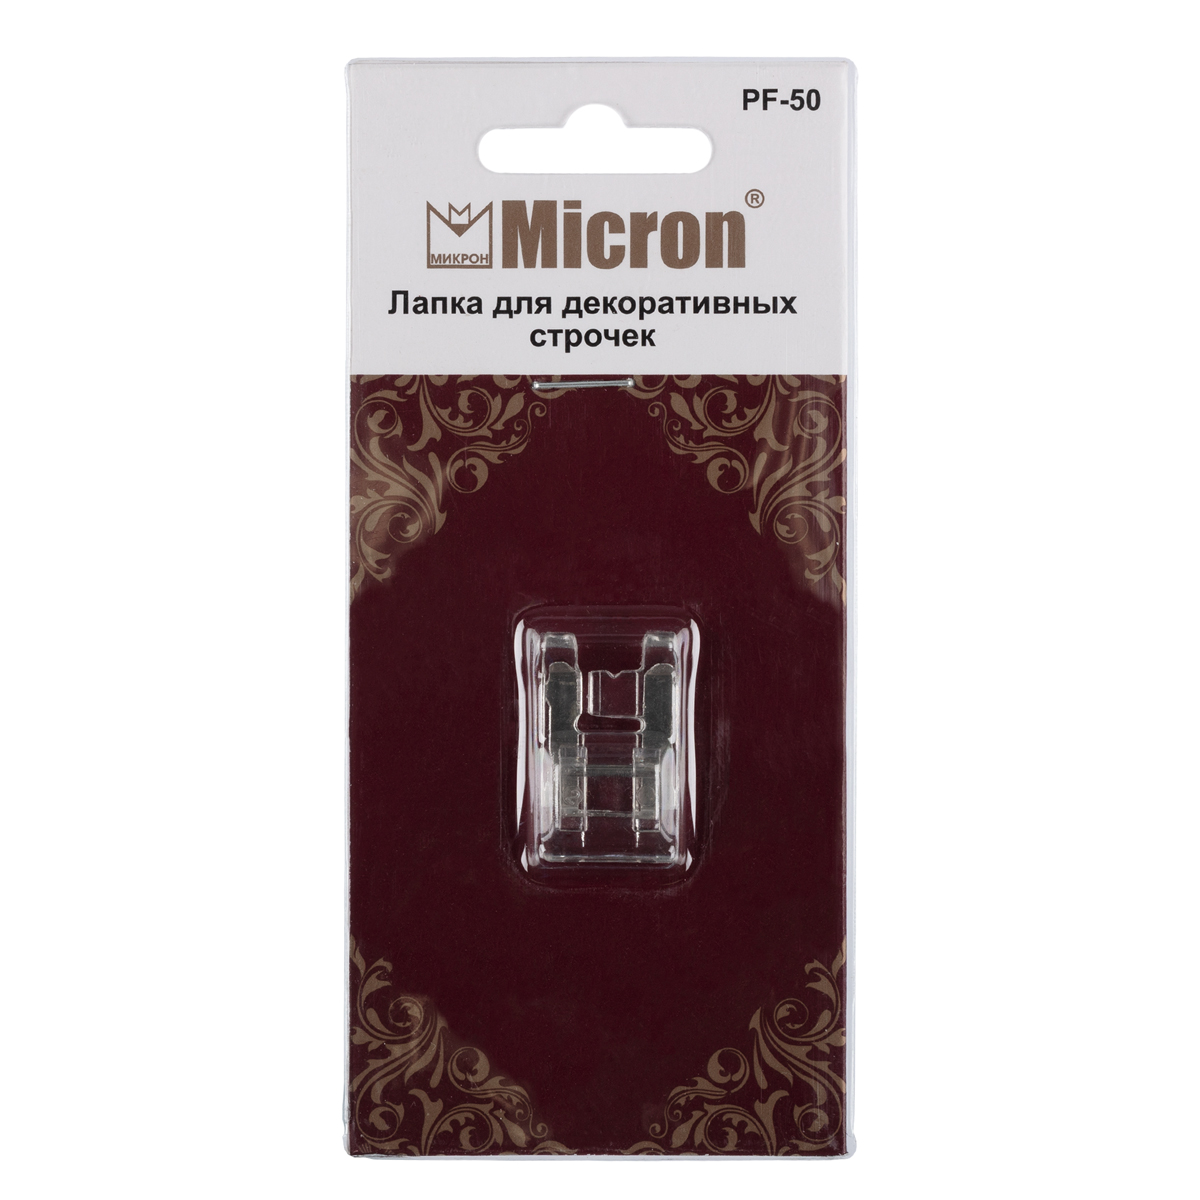 Micron PF-50 Лапка в блистере для декоративных строчек Фото 1.